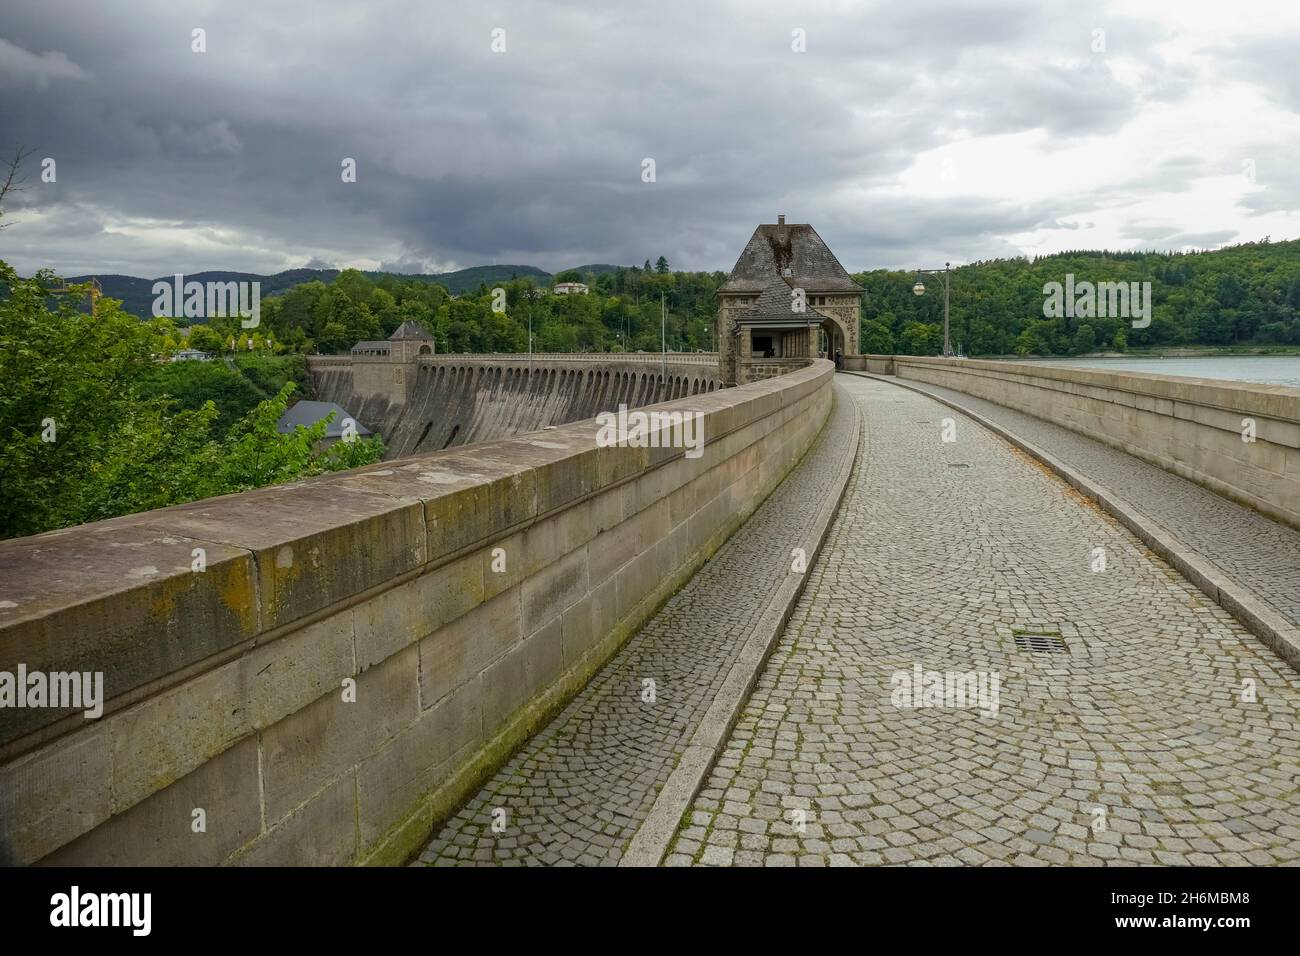 Scenery around the Edersee Dam in Hesse, Germany Stock Photo